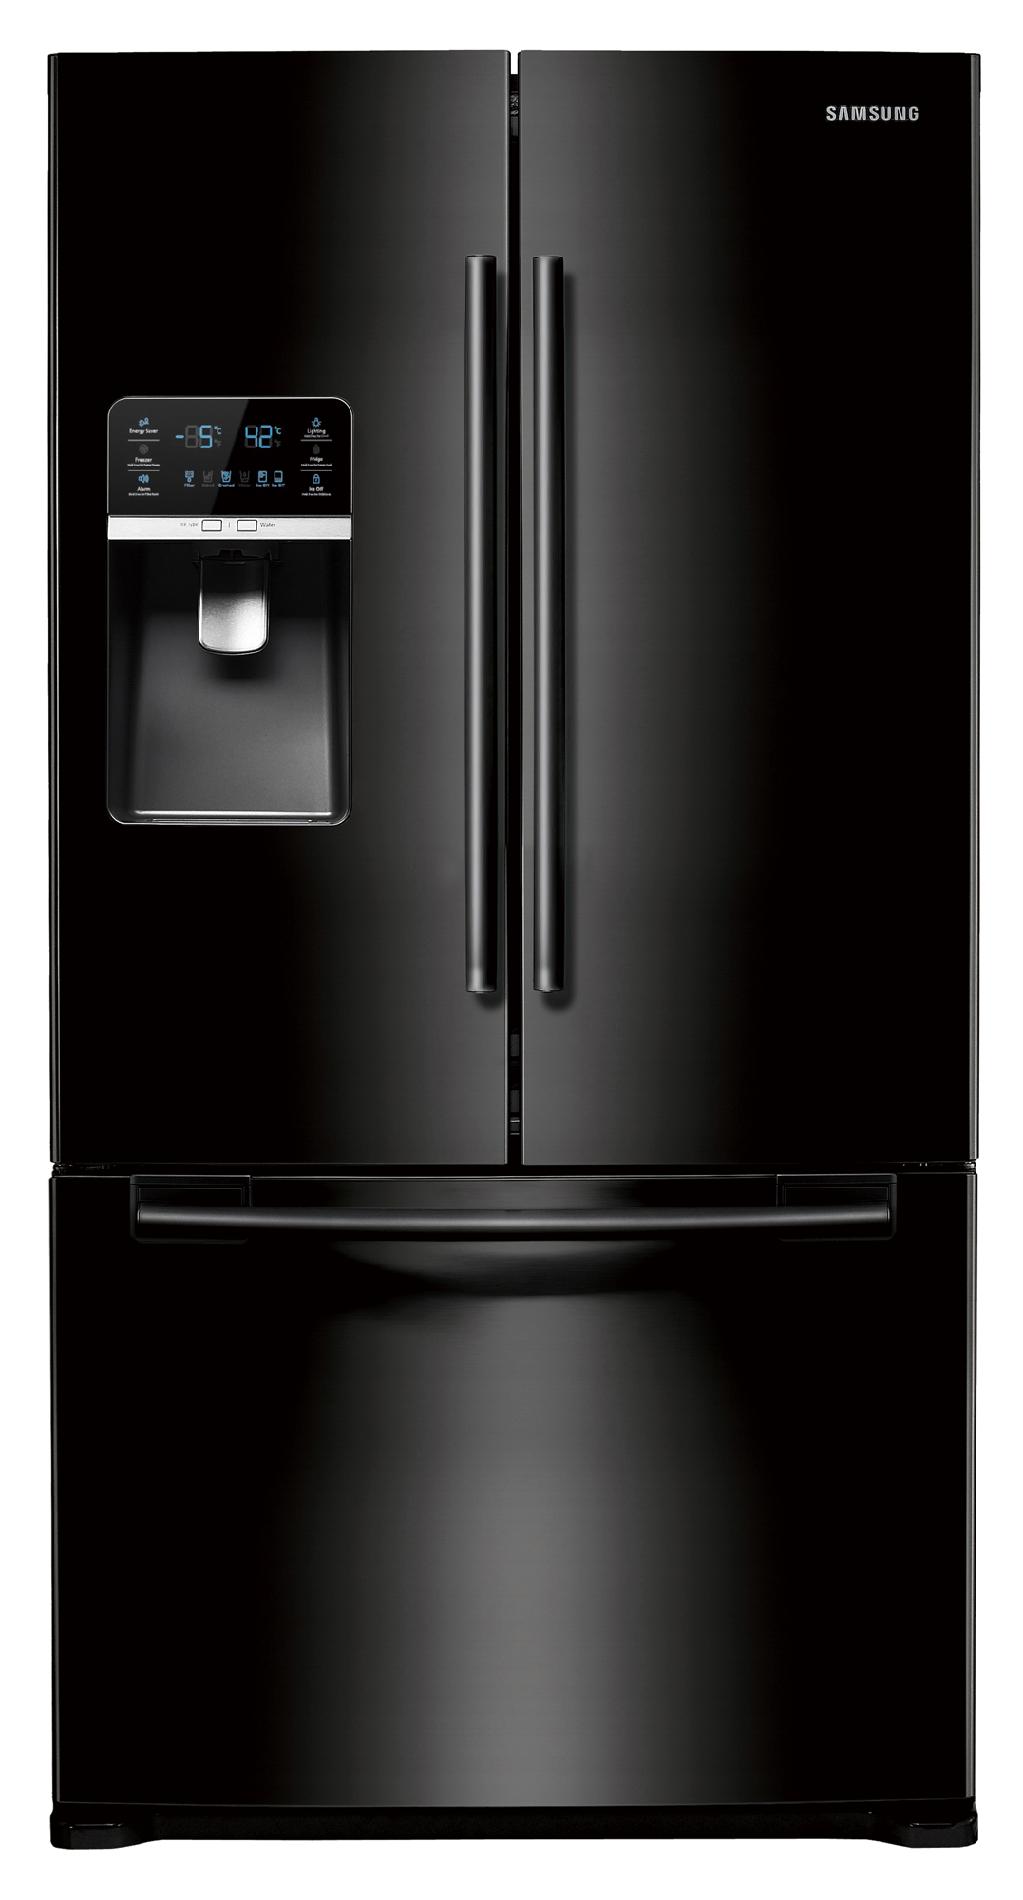 Samsung 29 cu. ft. French Door Refrigerator - Black